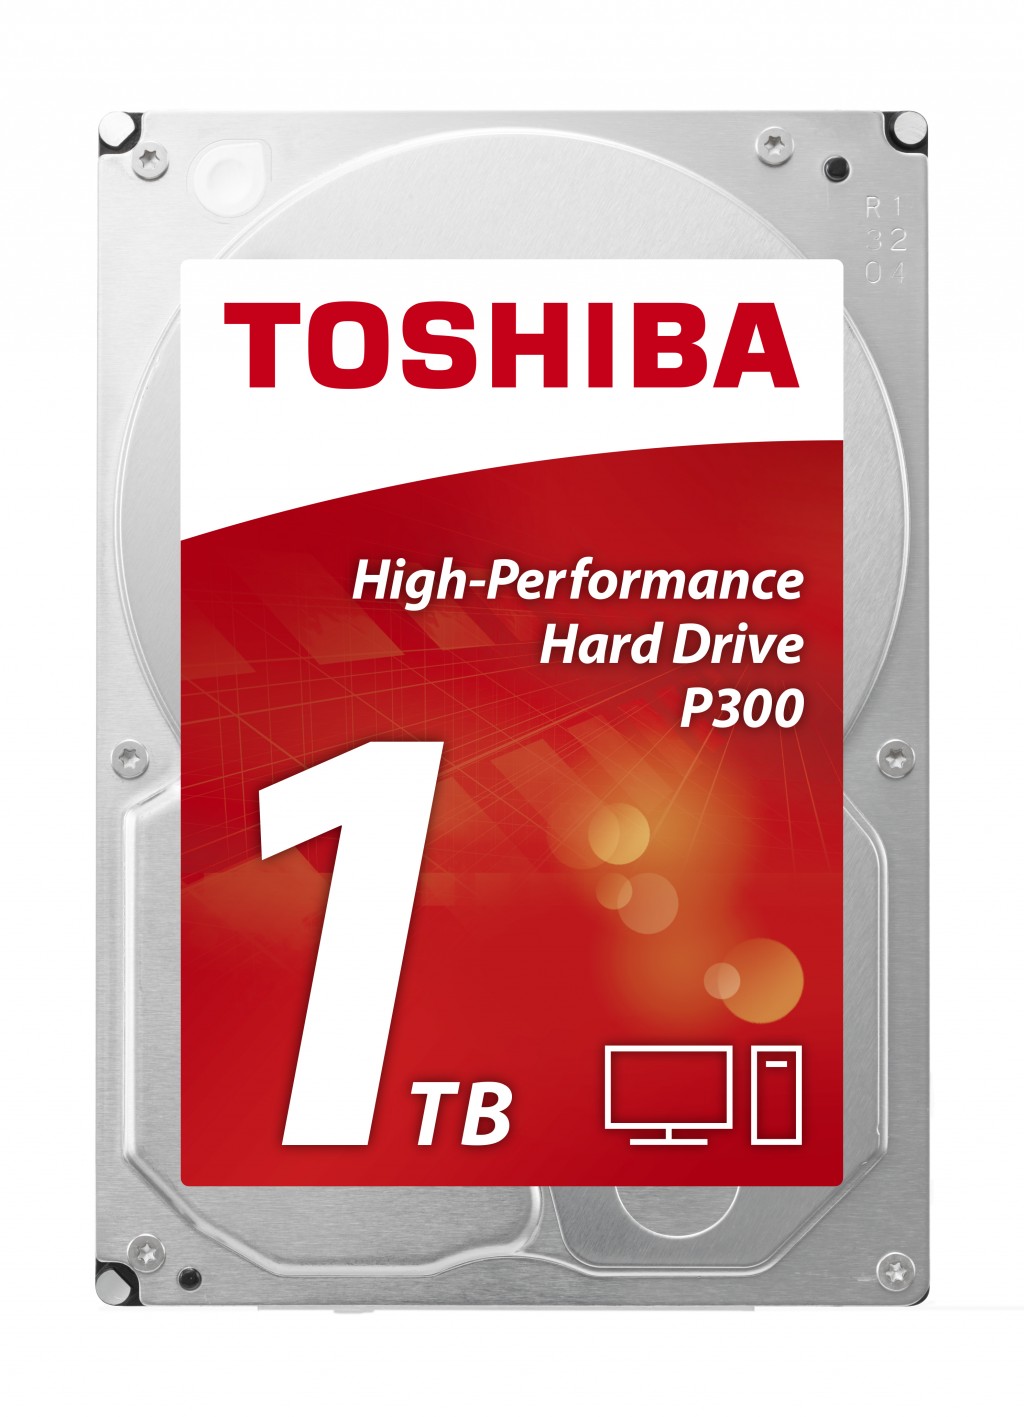 TOSHIBA P300 - High-Performance 1TB